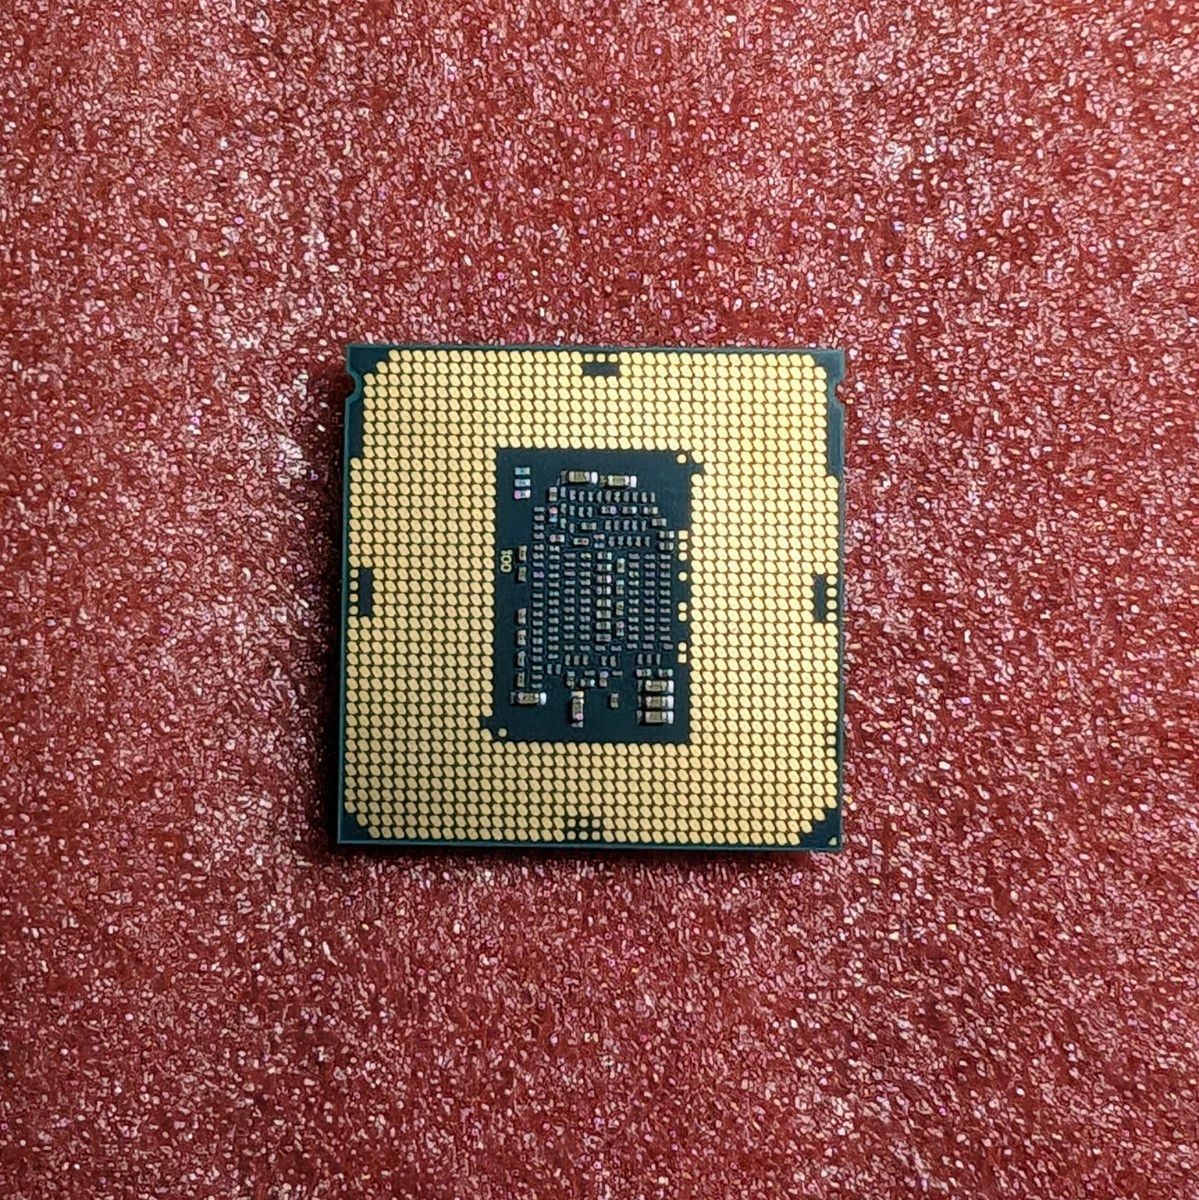 Intel  Core i5 6400 動作確認済み 